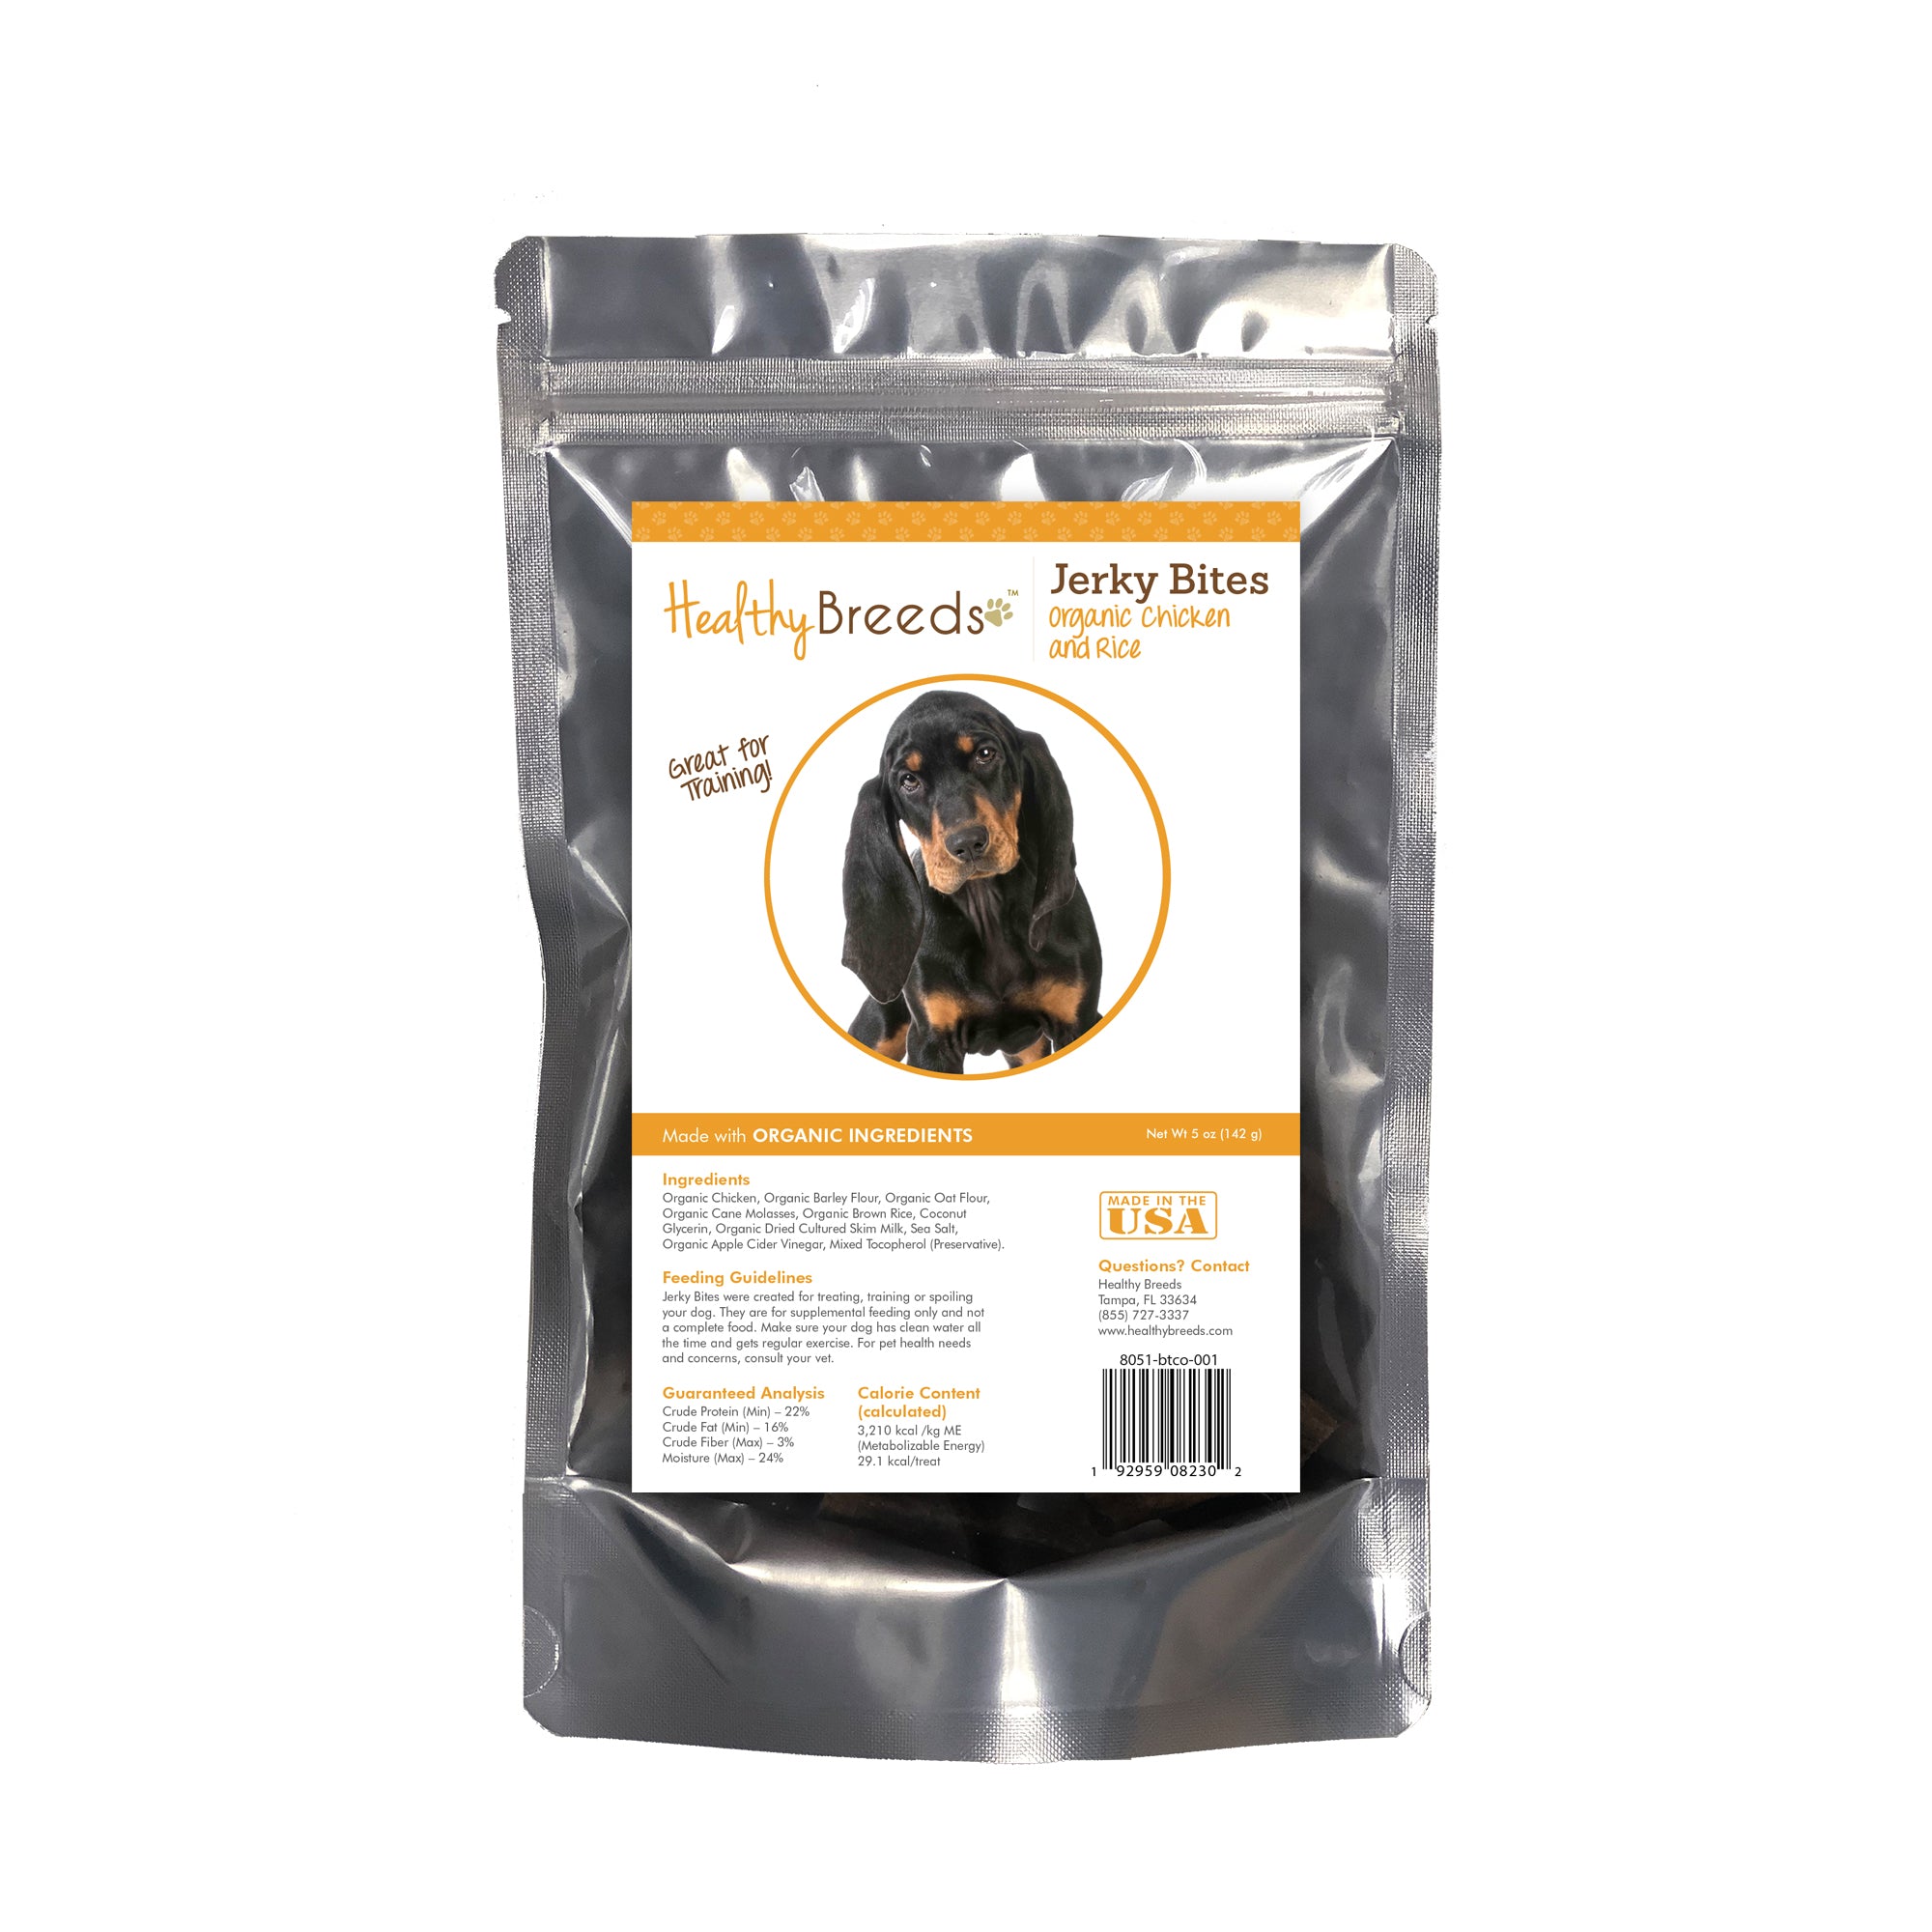 Black and Tan Coonhound Jerky Bites Chicken & Rice Recipe Dog Treats 5 oz